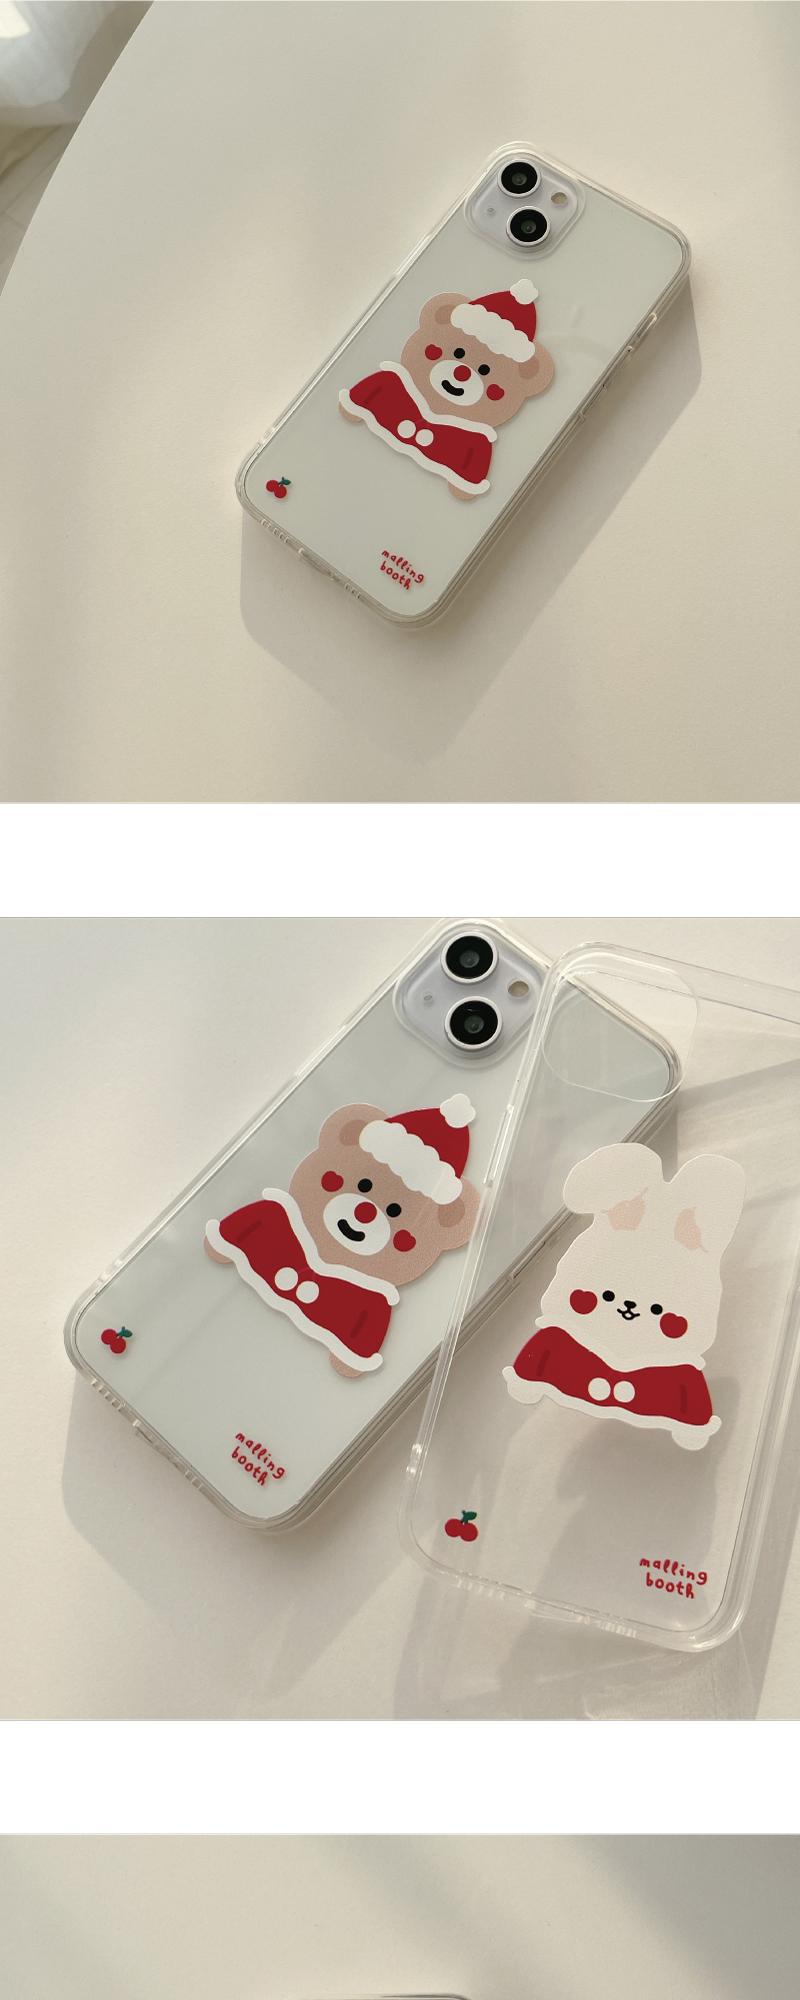 Cherry manteau smartphone case